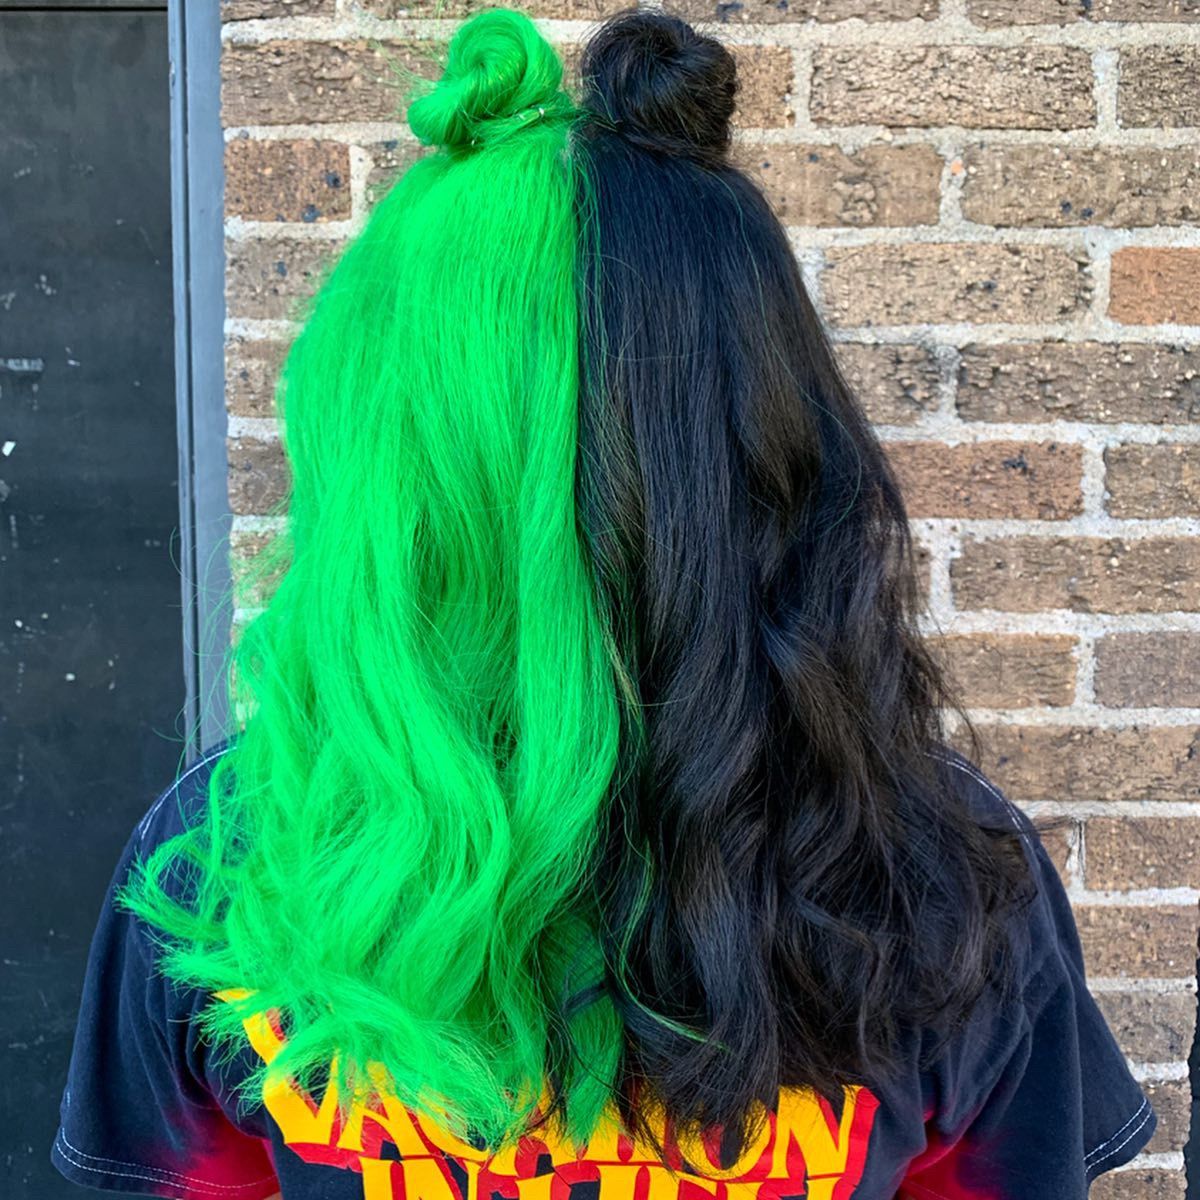 david sheahan recommends Half Black Half Neon Green Hair